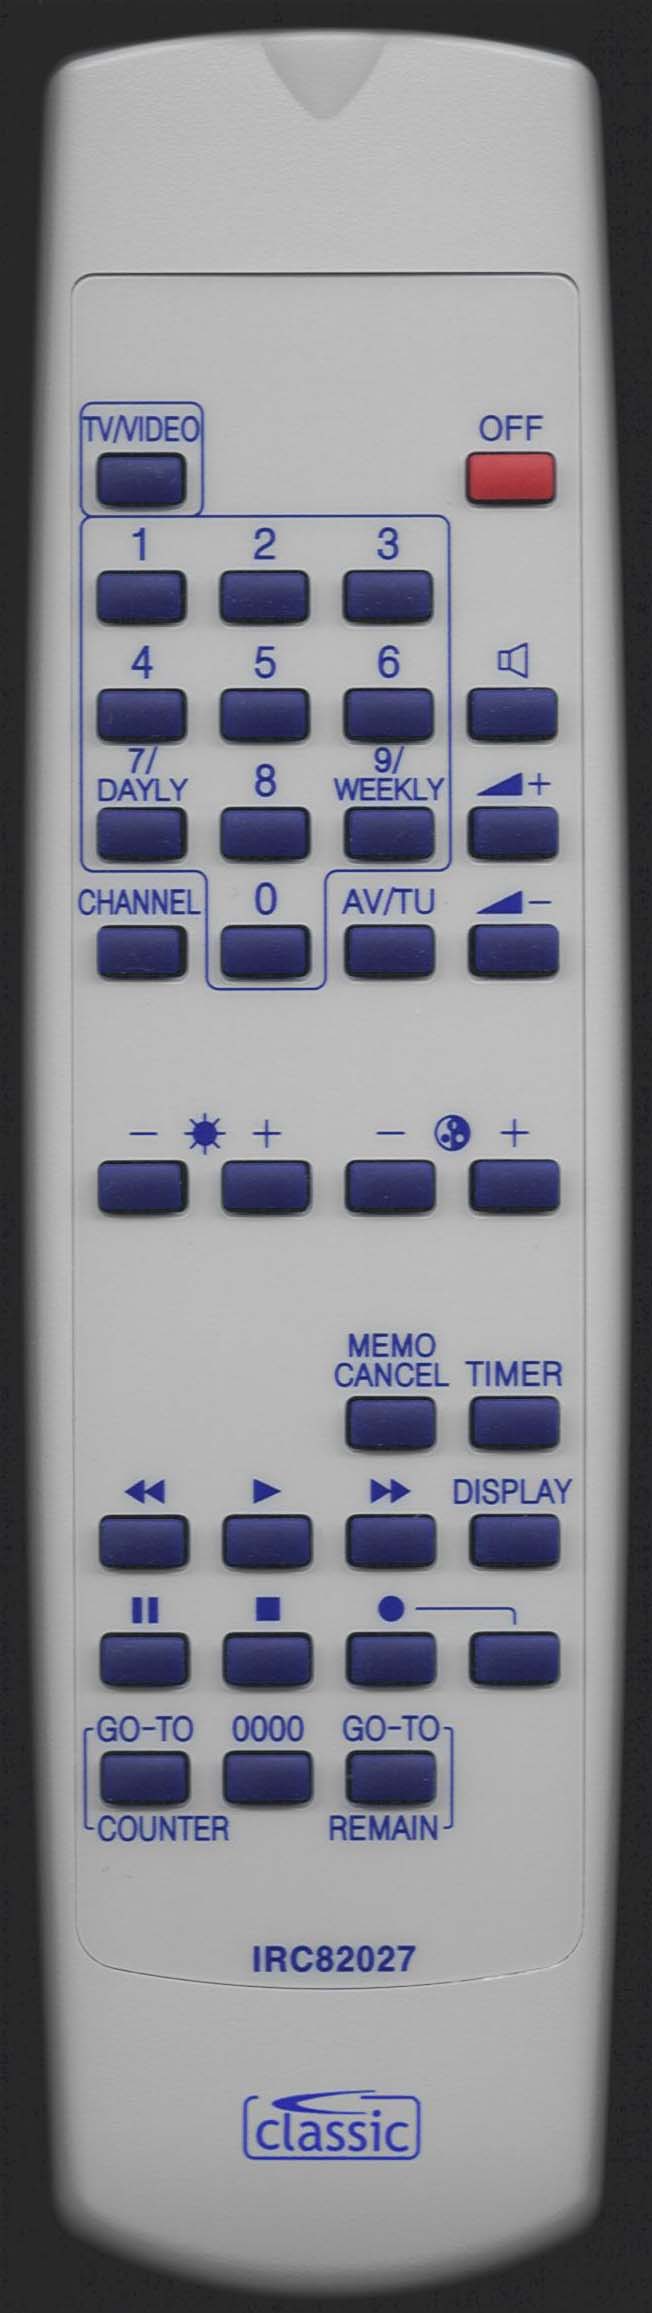 Thomson FB 1300 Remote Control